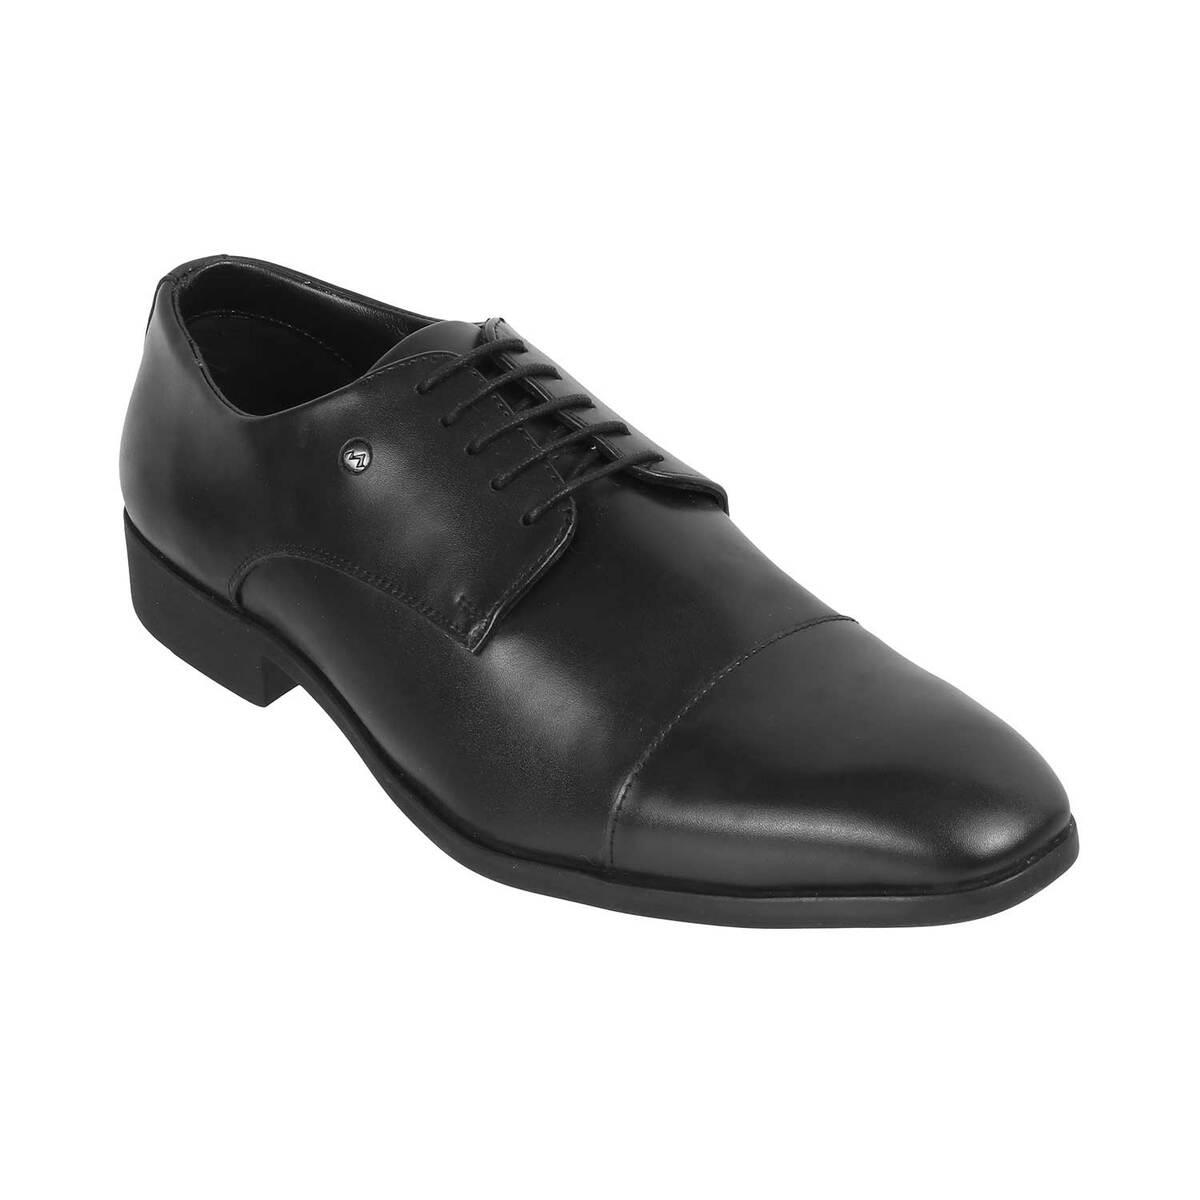 Buy Metro Men Black Formal Oxford Online | SKU: 19-61-11-40 - Metro Shoes